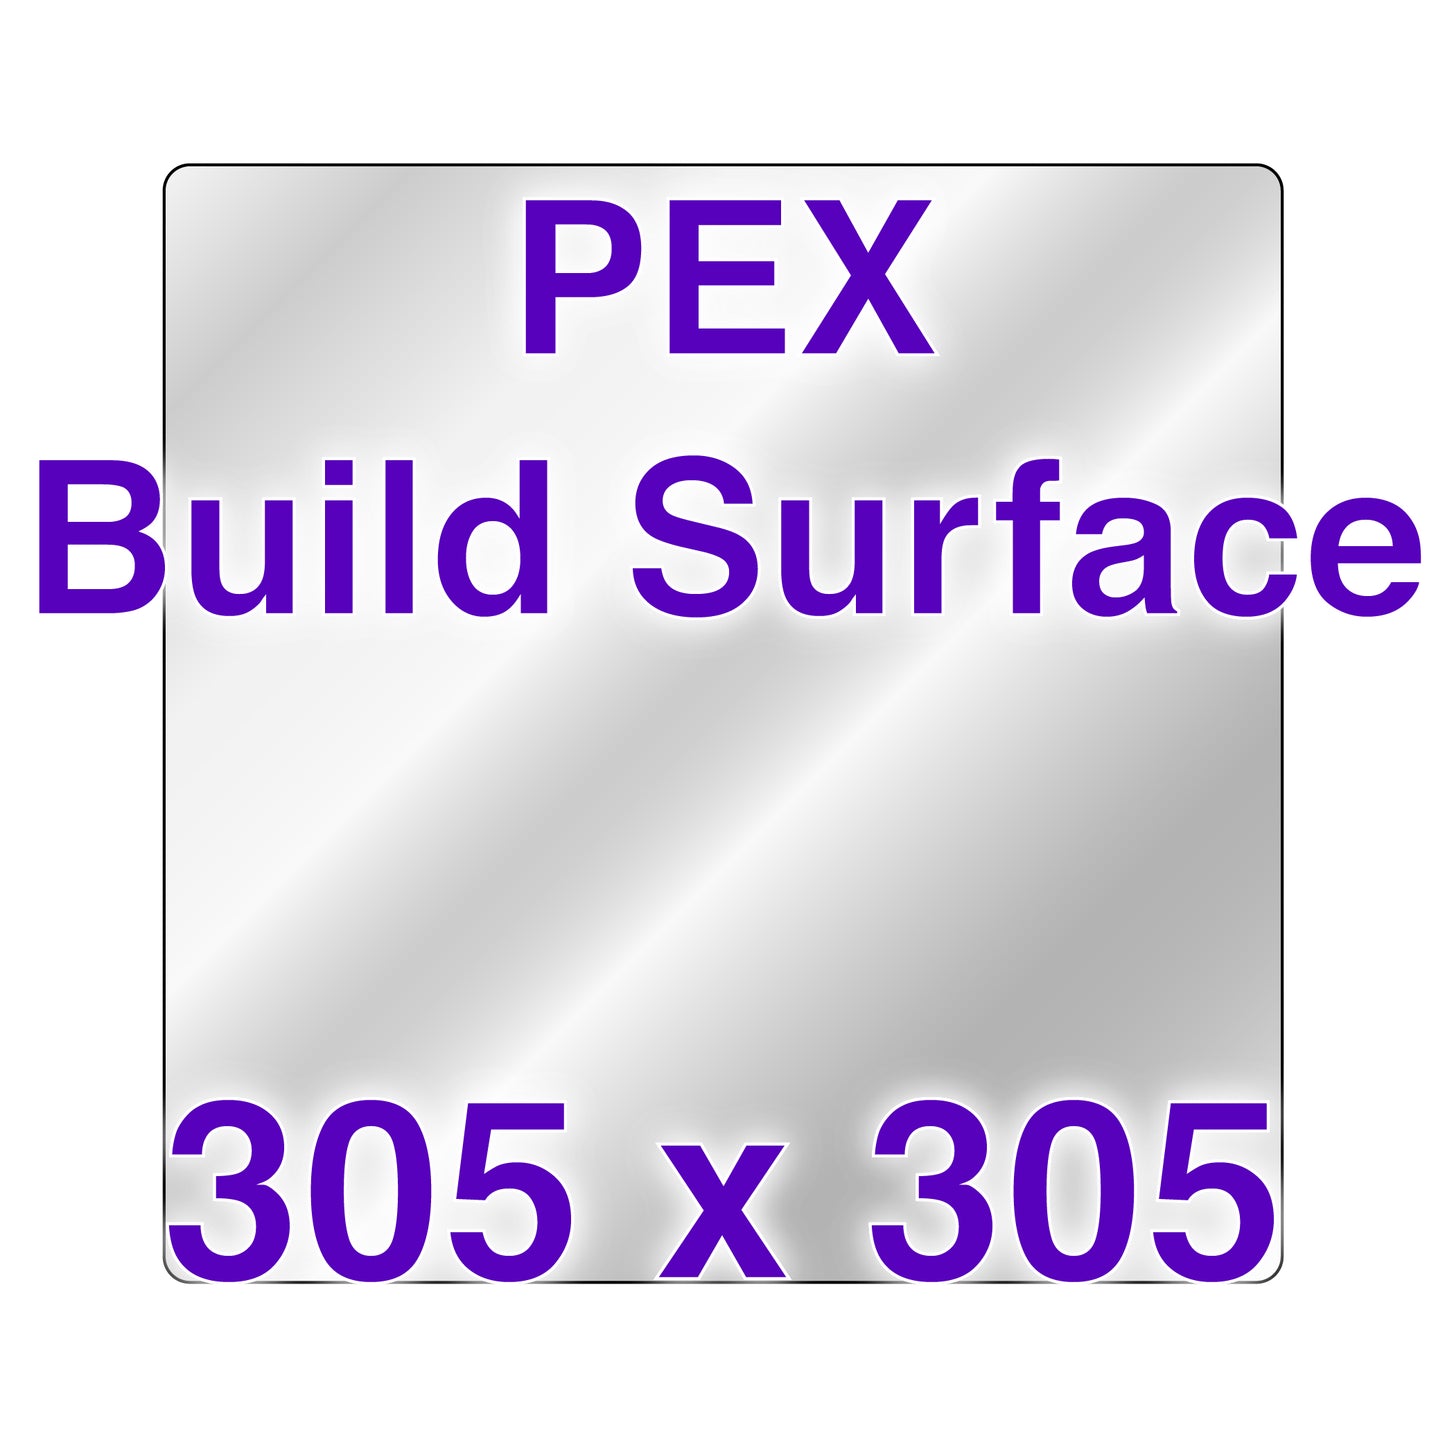 PEX Build Surface - 305 x 305